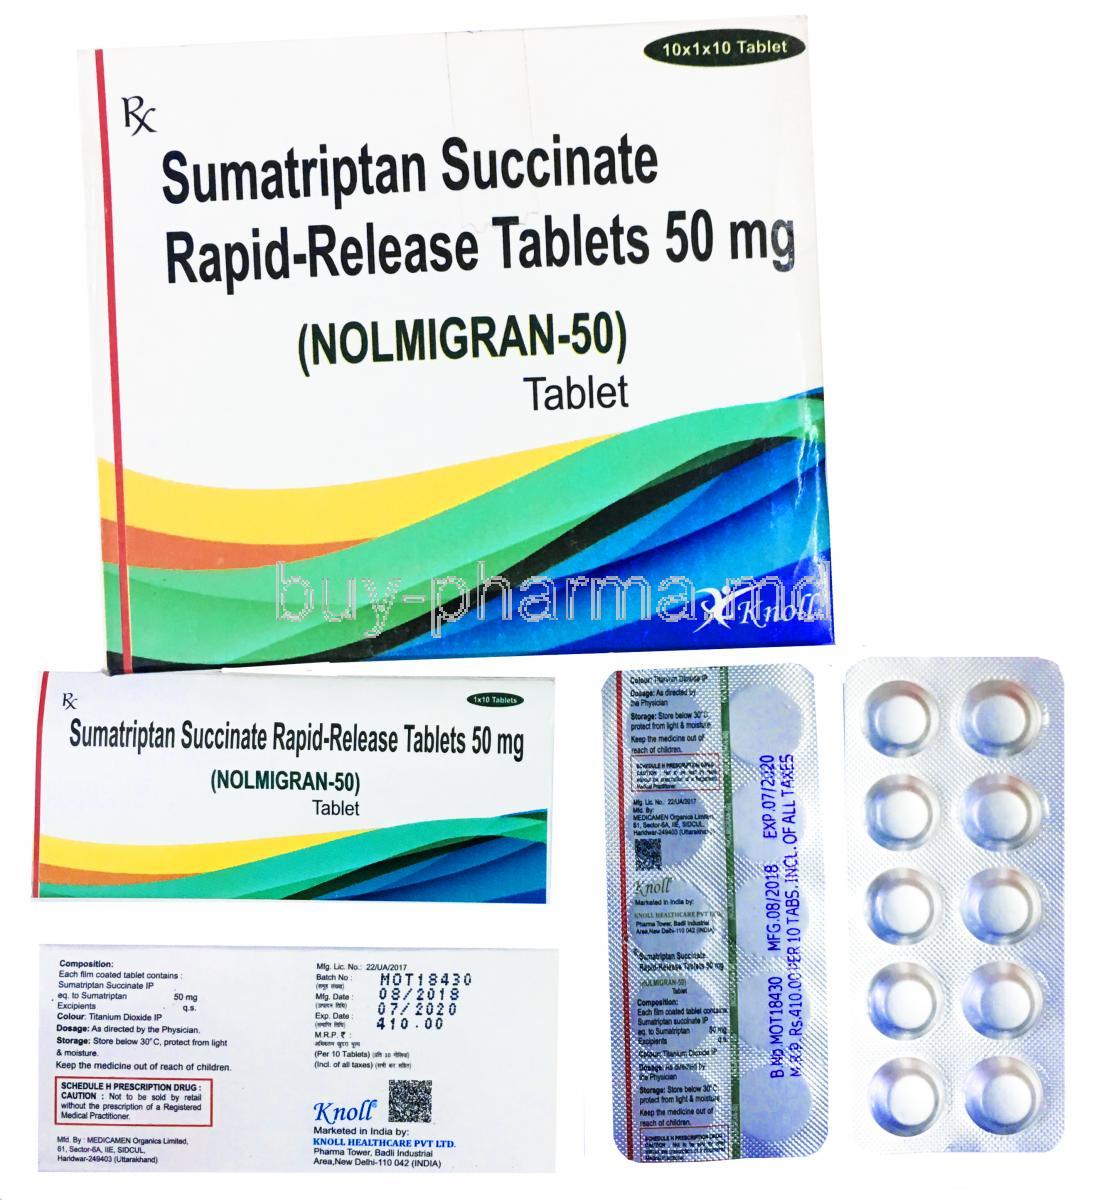 Sumatriptan Rapid Release Tablet, box and blister pack presentation